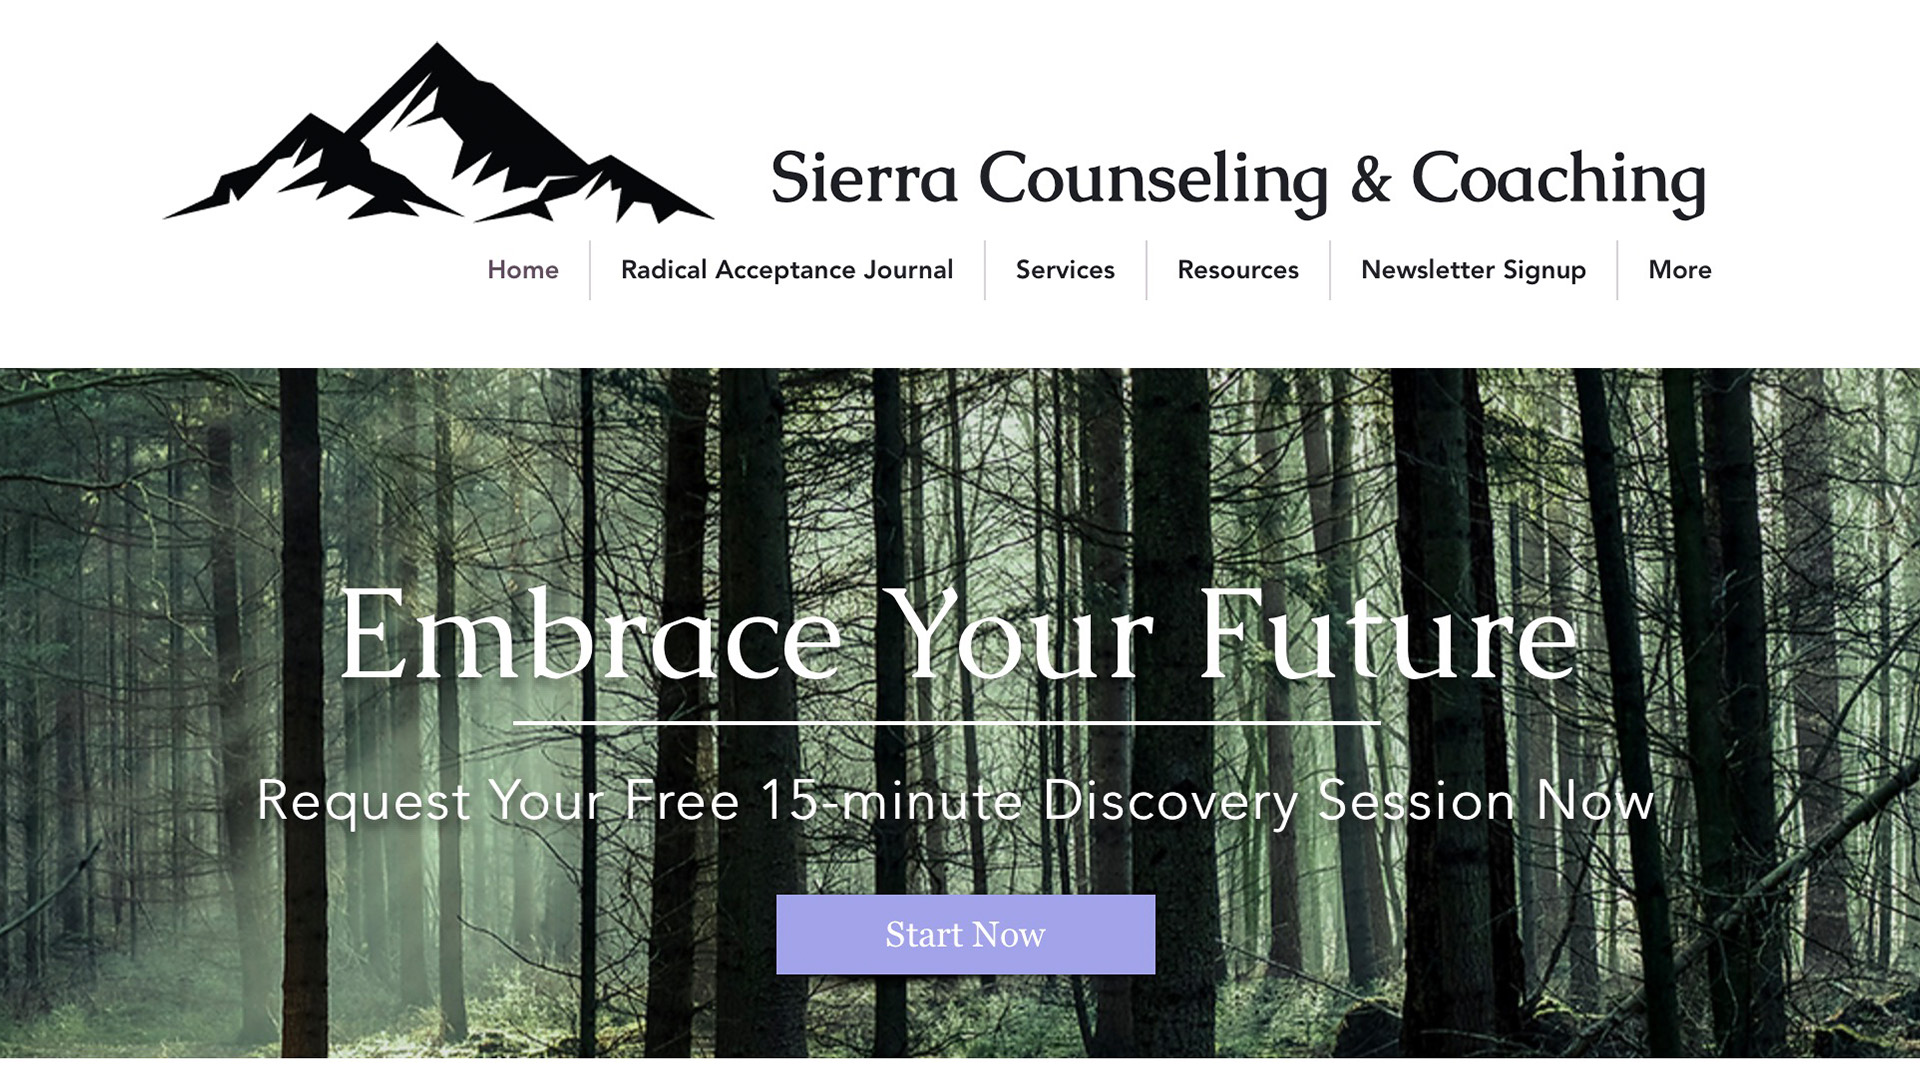 Sierra Counseling & Coaching - Web development on Wix